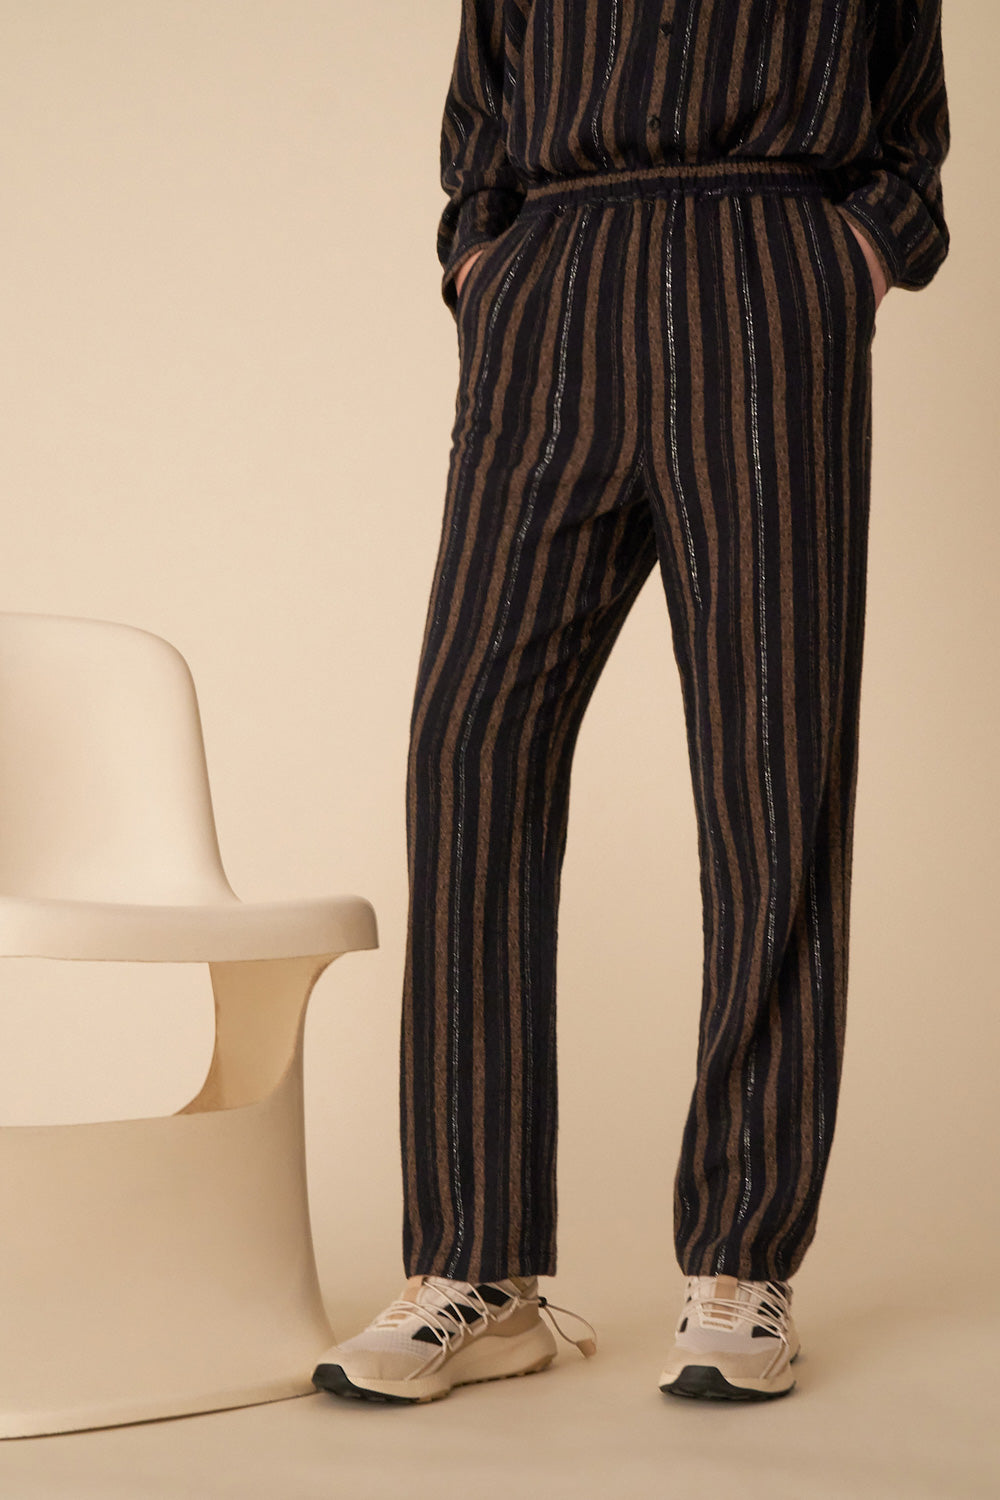 bonnie etretat striped trousers